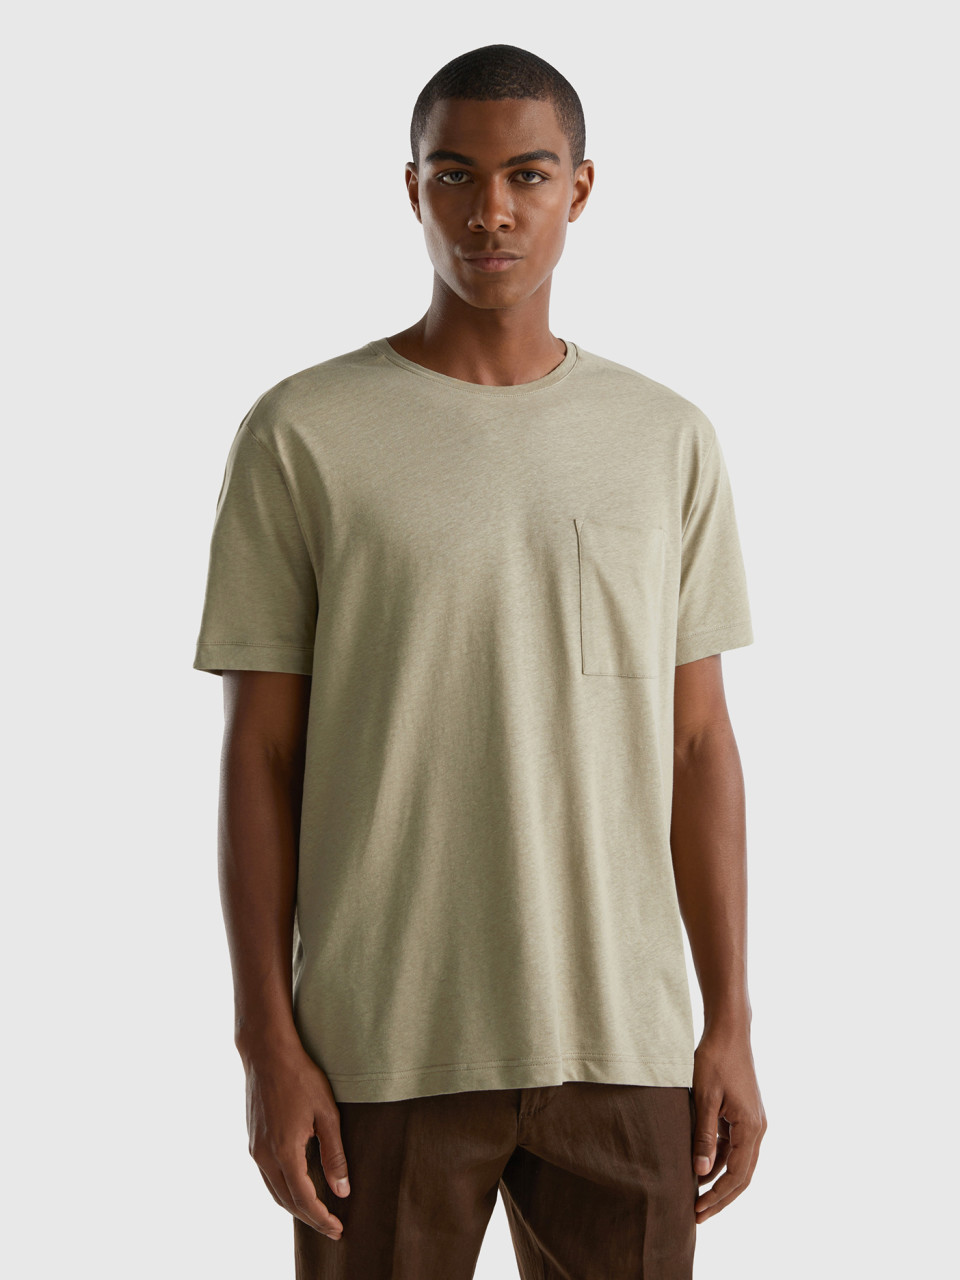 Benetton, T-shirt In Linen Blend With Pocket, Light Green, Men